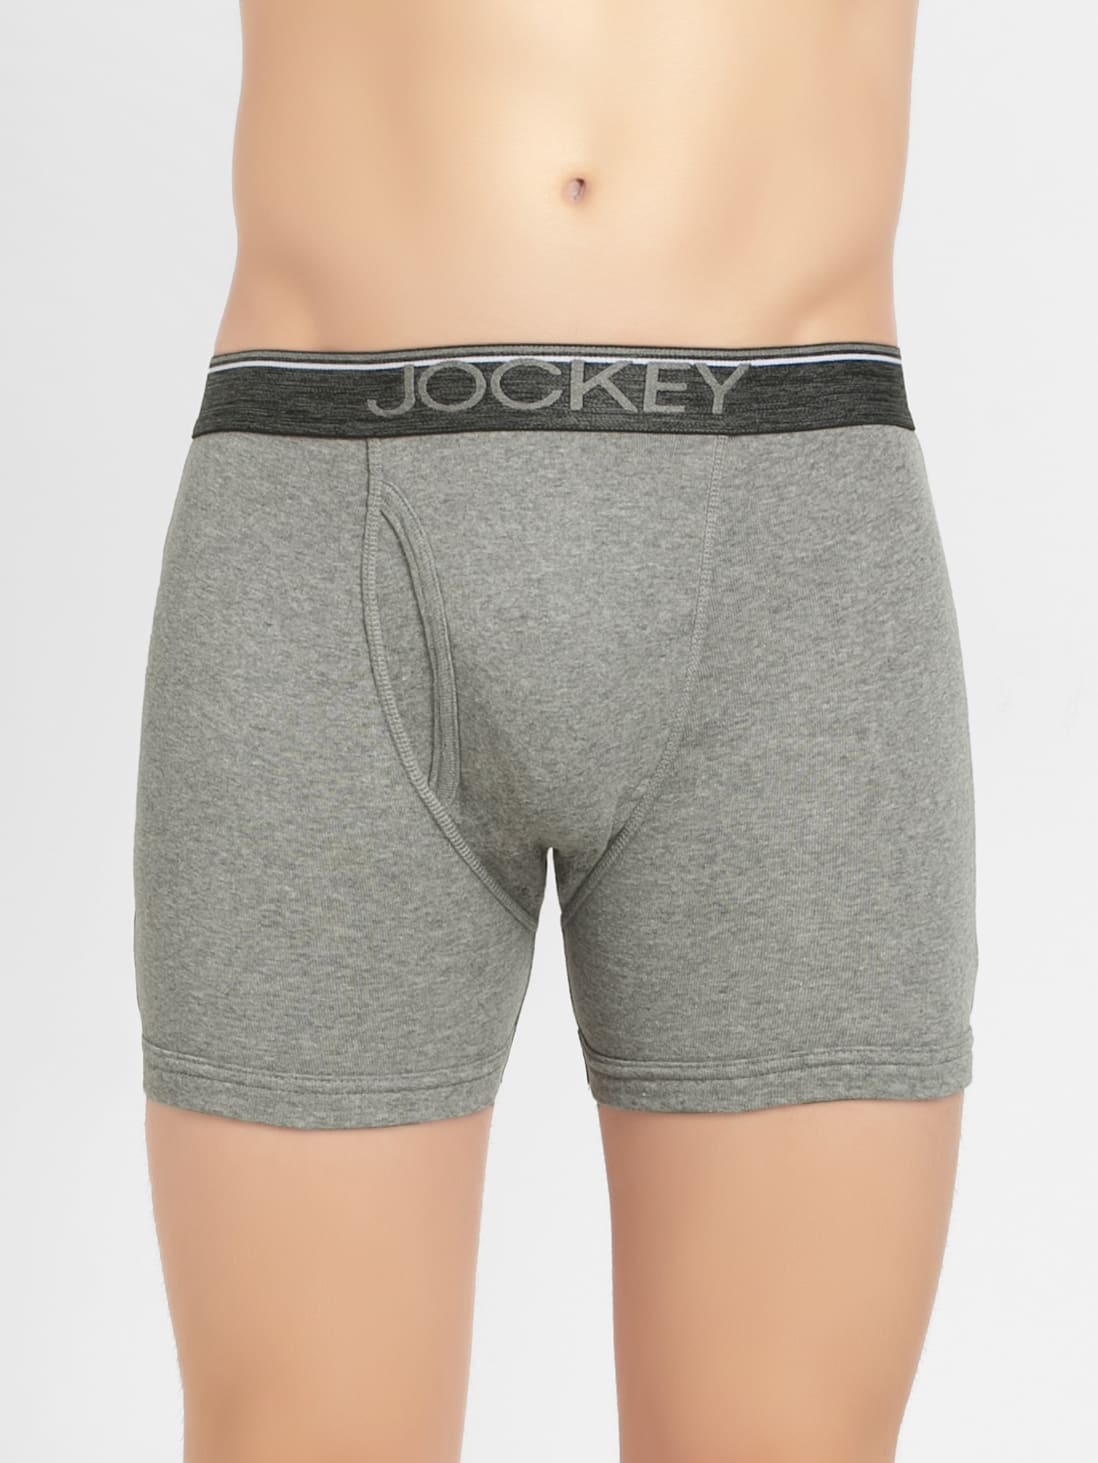 Jockey Boxer Briefs Sz M - 4 Total - Underwear & Socks